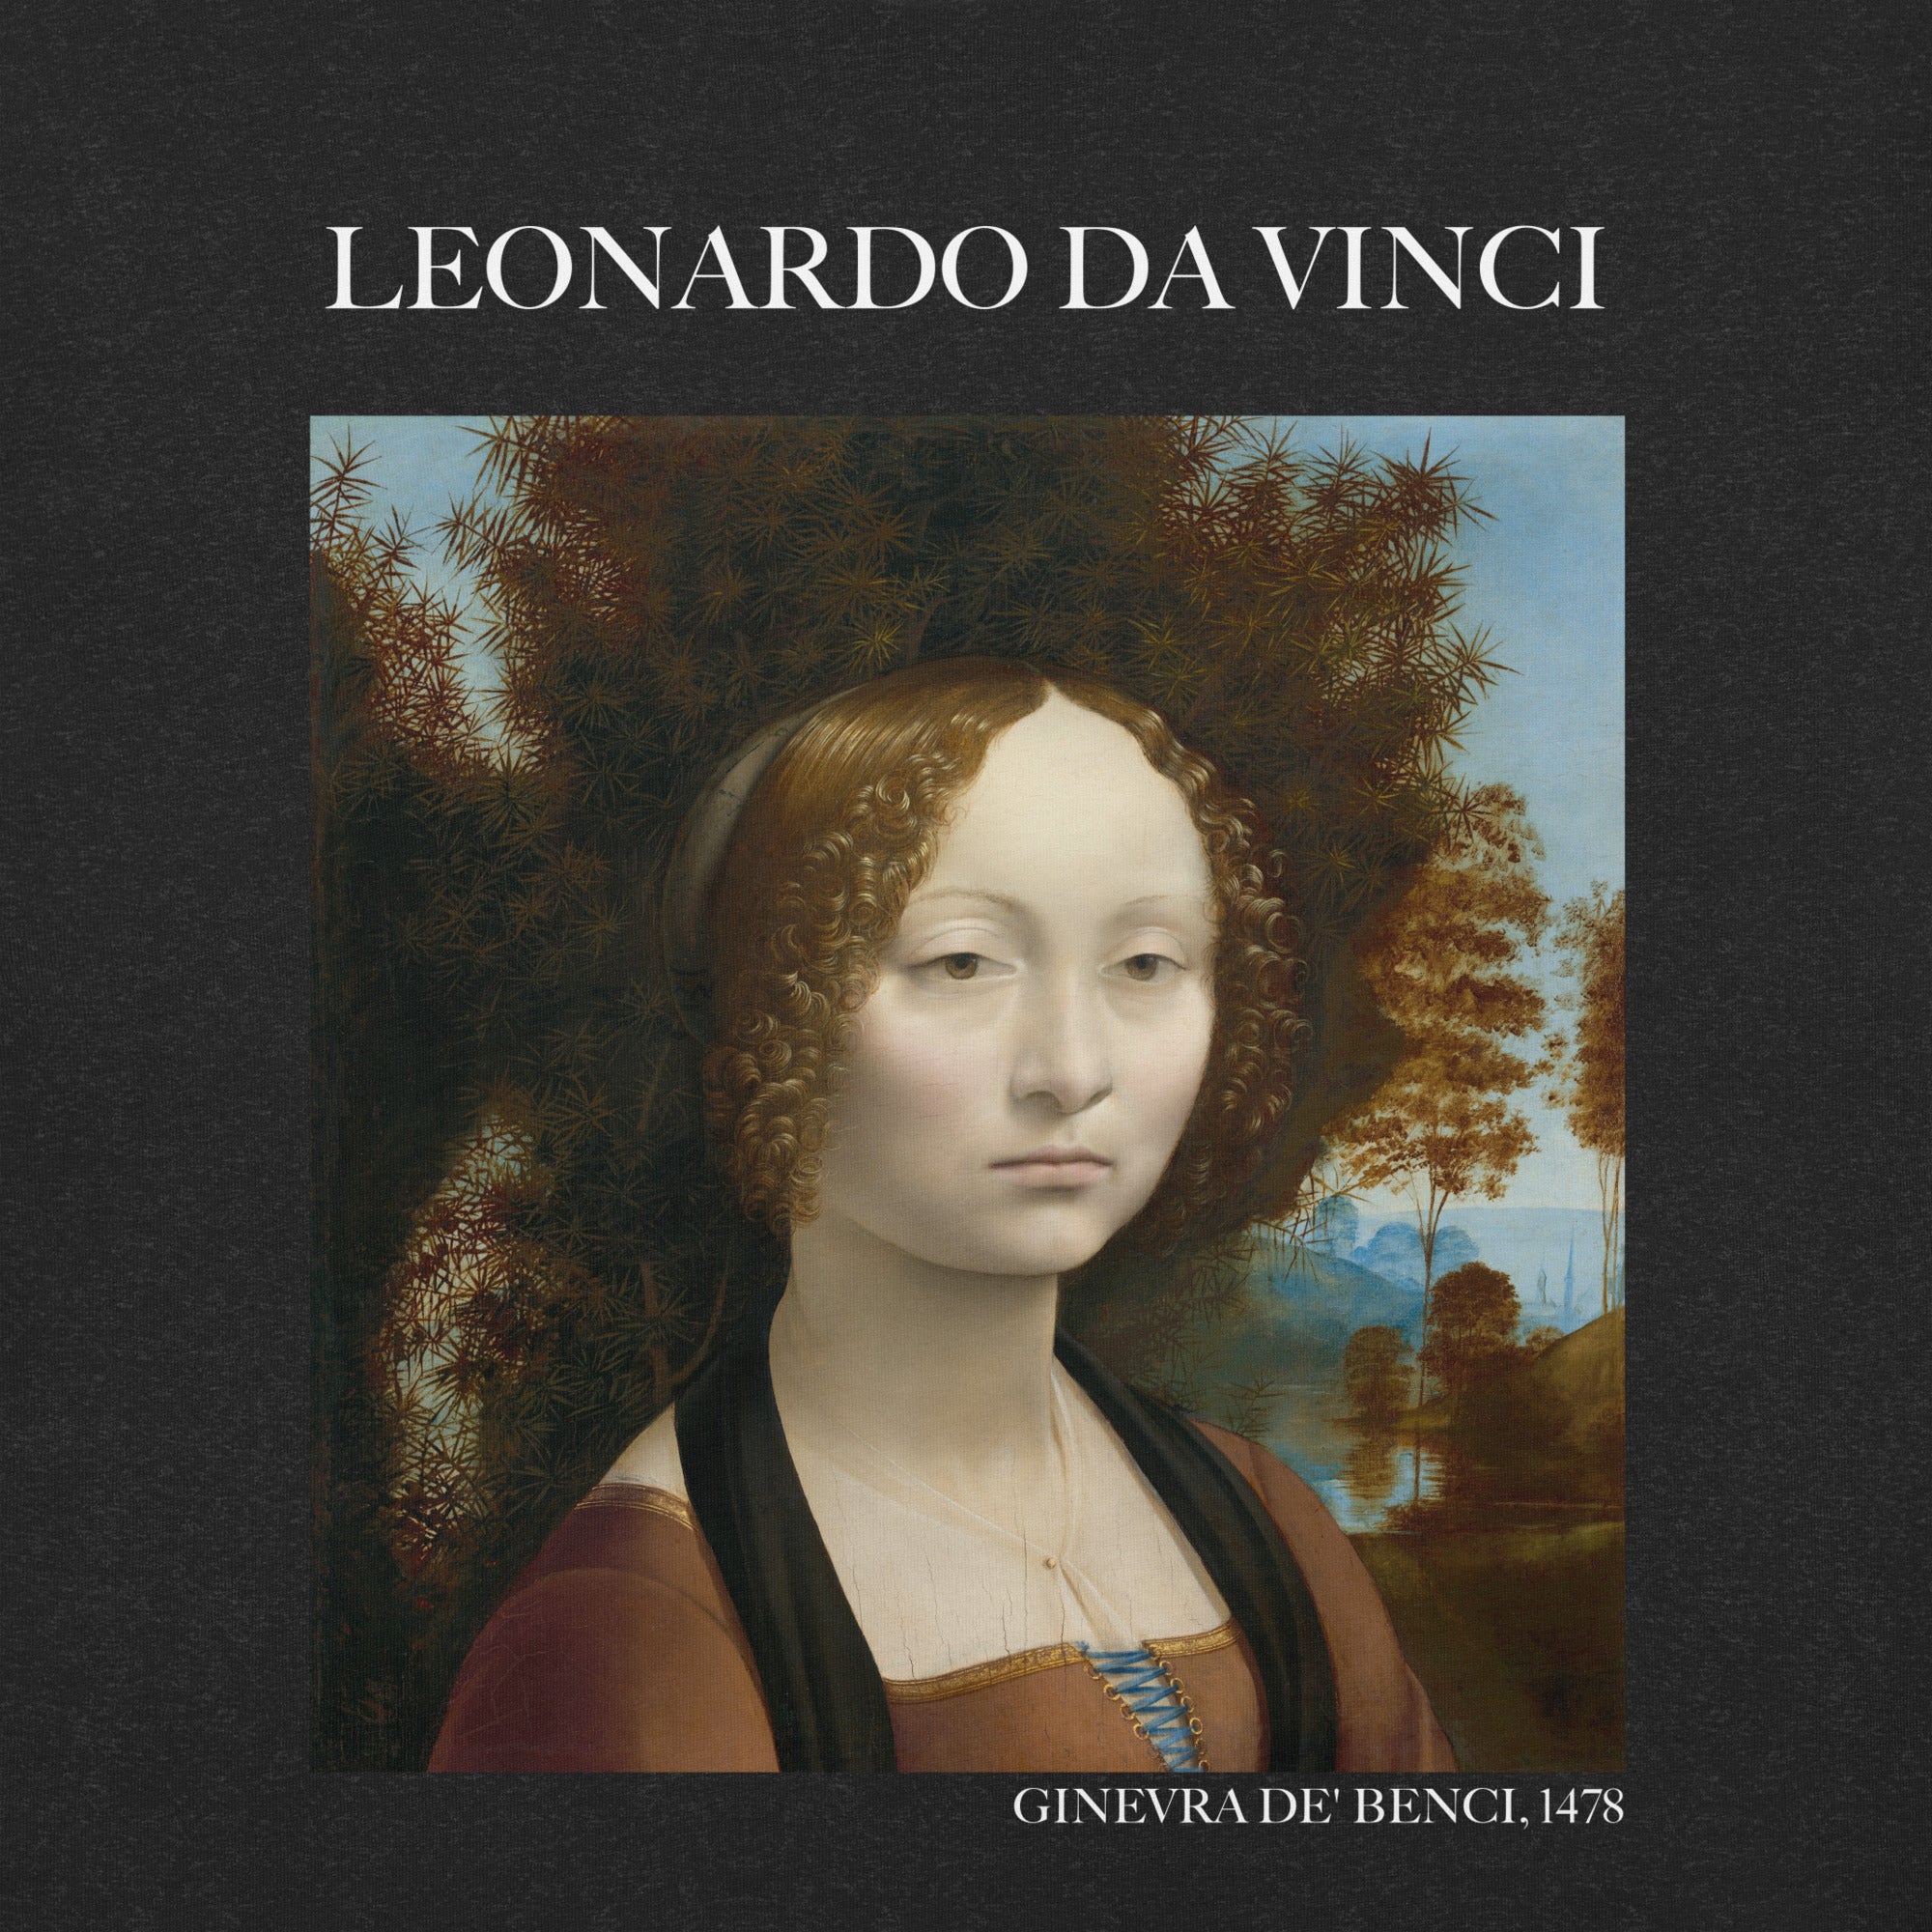 Leonardo da Vinci 'Ginevra de' Benci' Famous Painting T-Shirt | Unisex Classic Art Tee